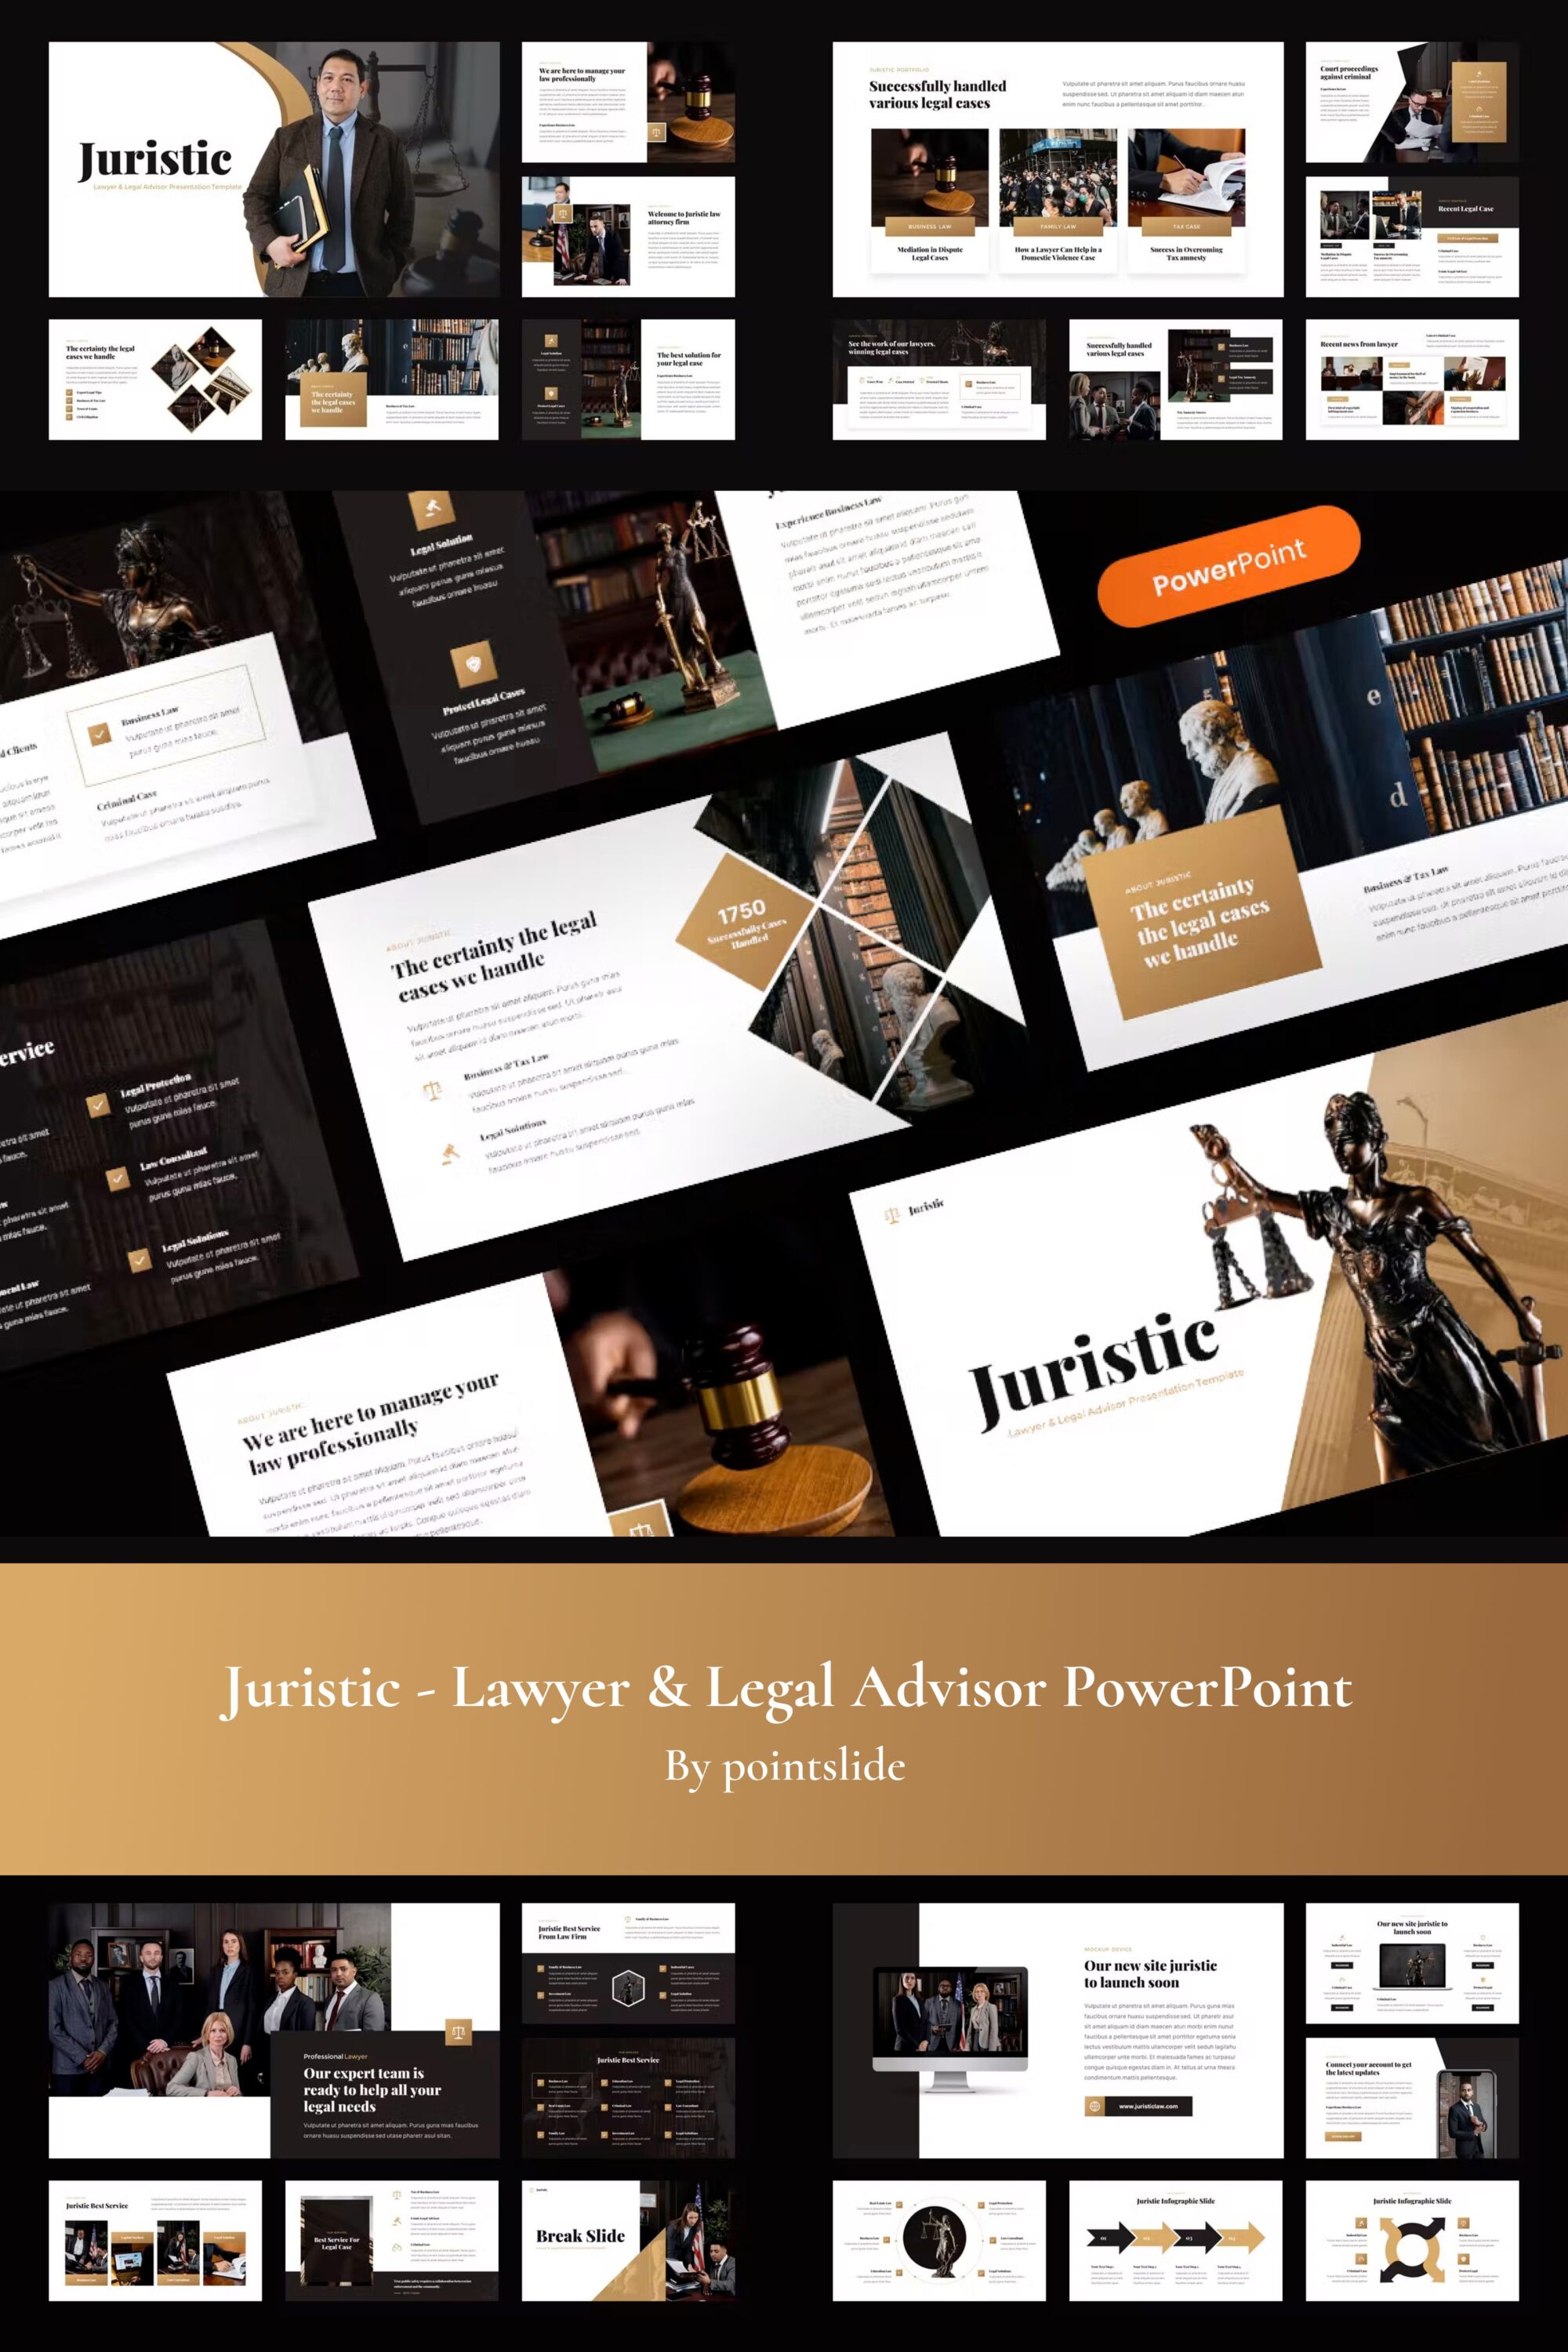 Juristic Lawyer Legal Advisor Powerpoint Pinterest.